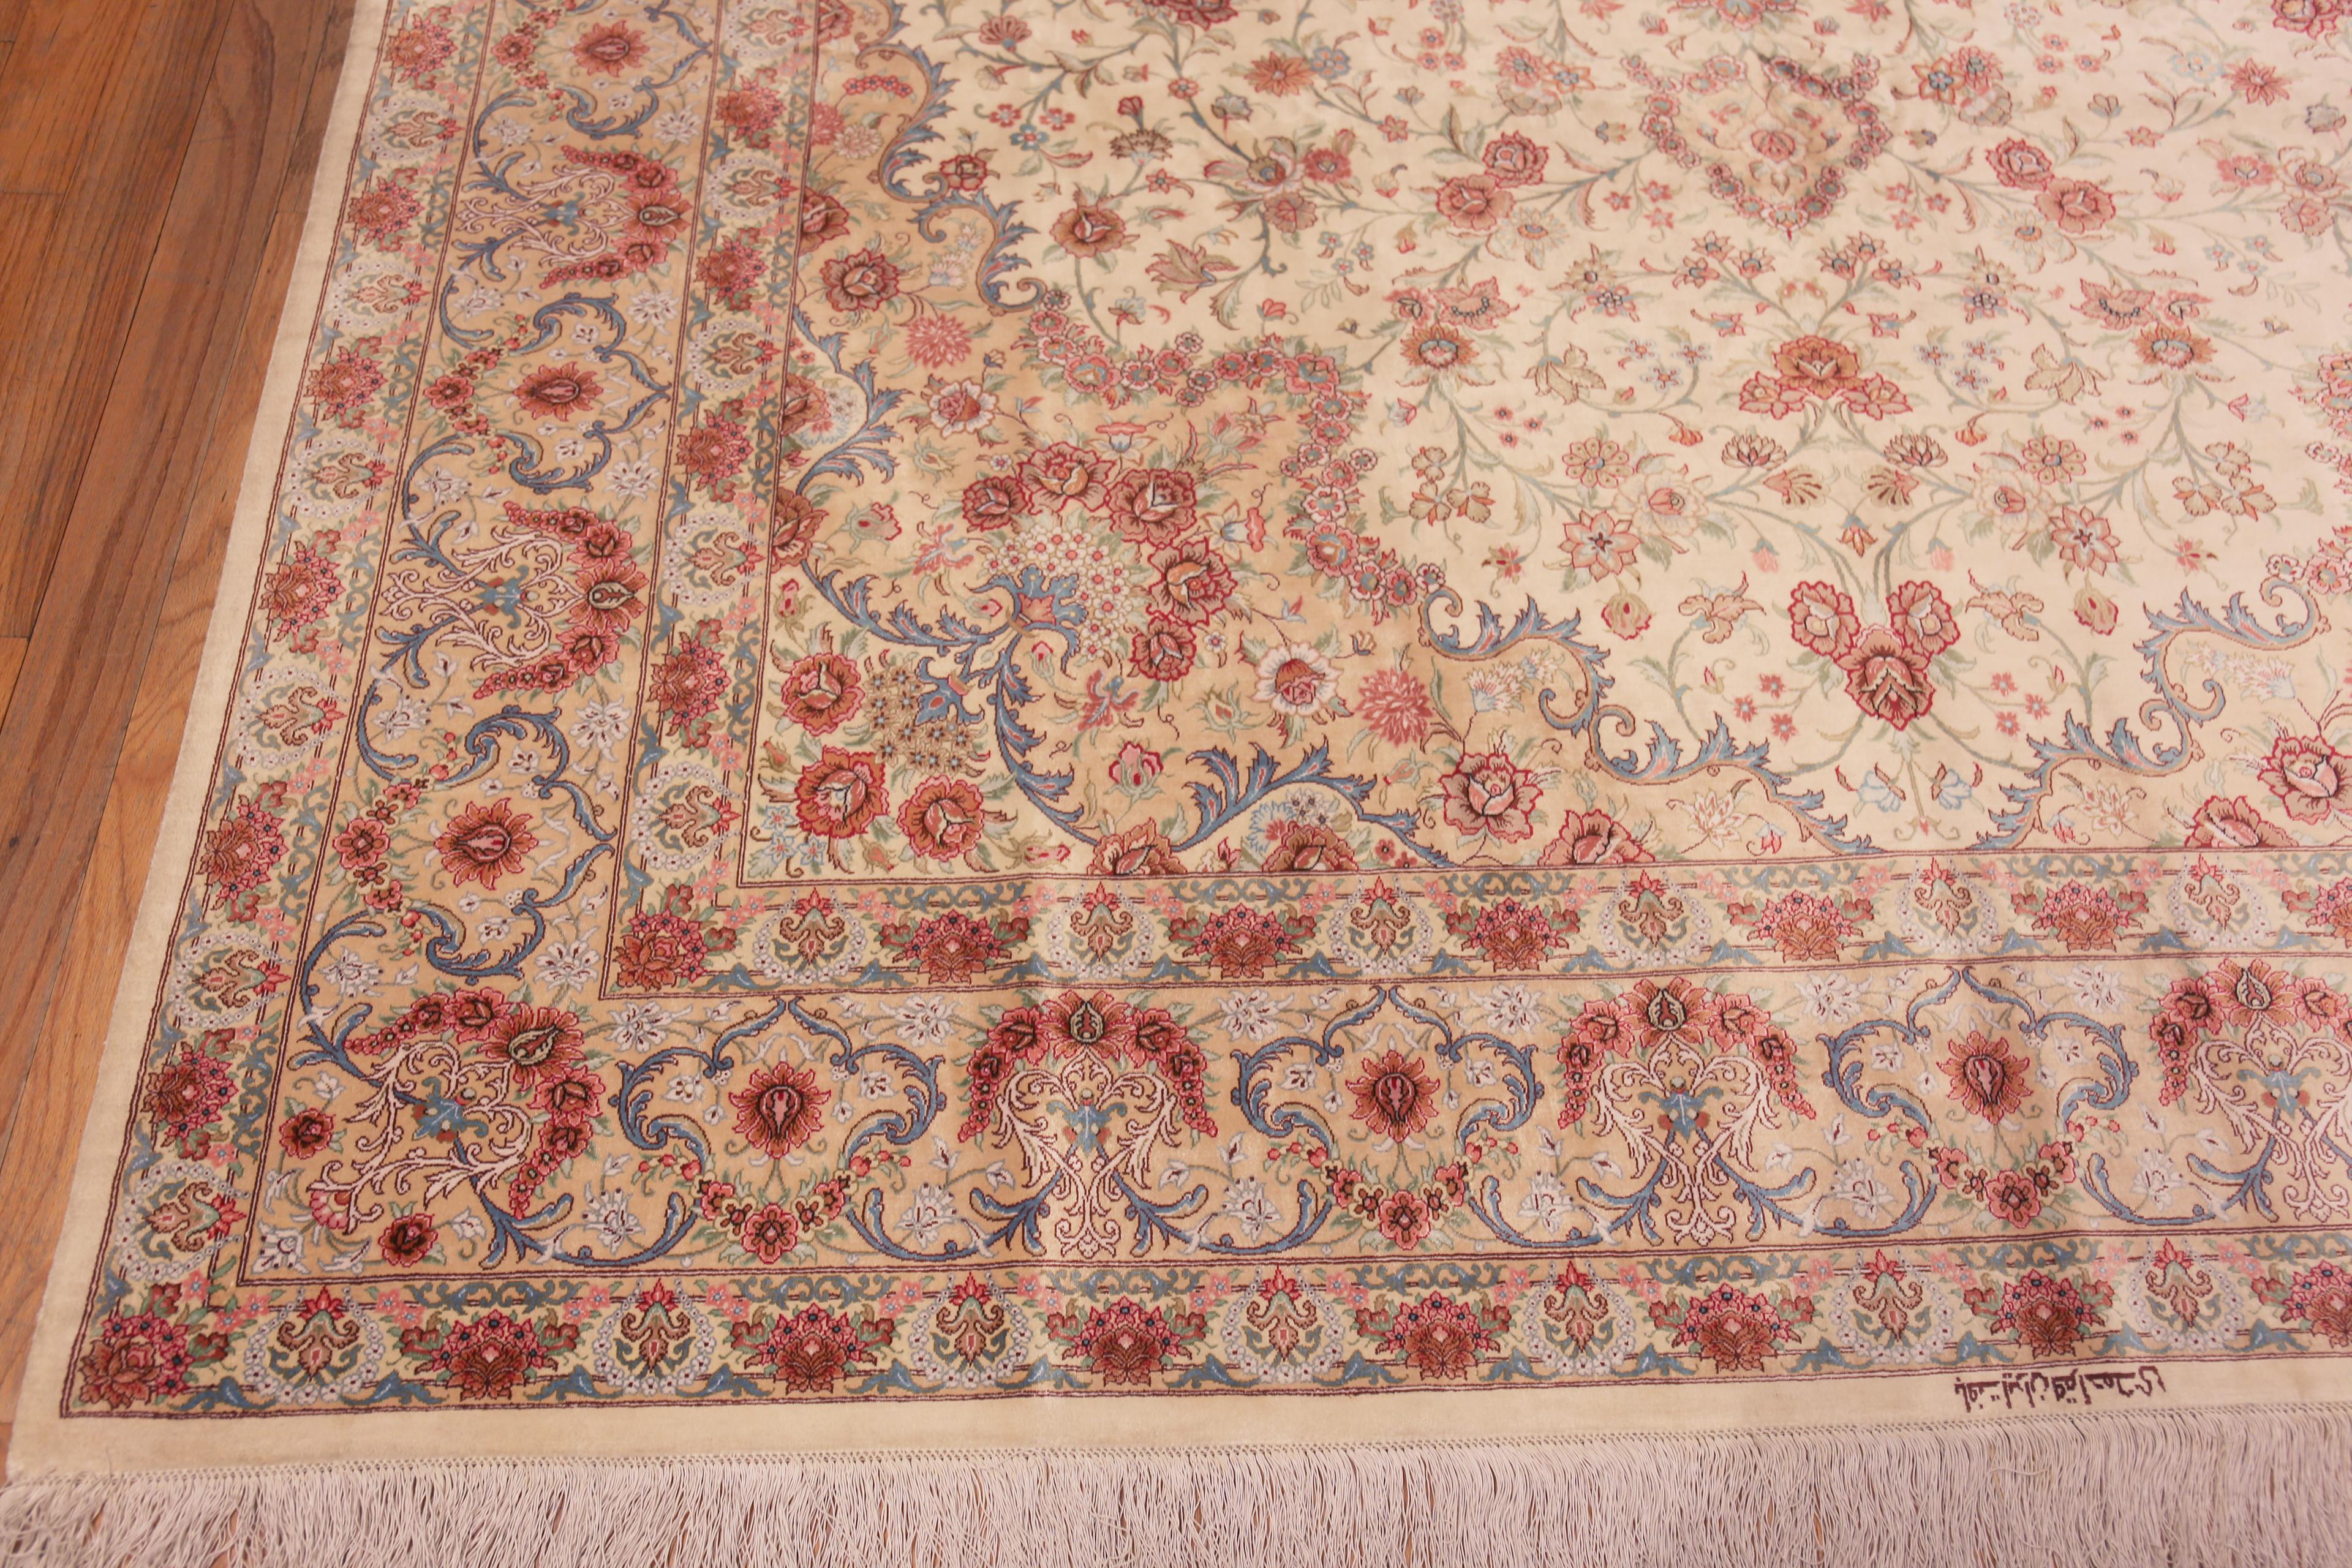 20th Century Gorgeous Luxurious Floral Room Size Vintage Persian Silk Qum Rug 8'2